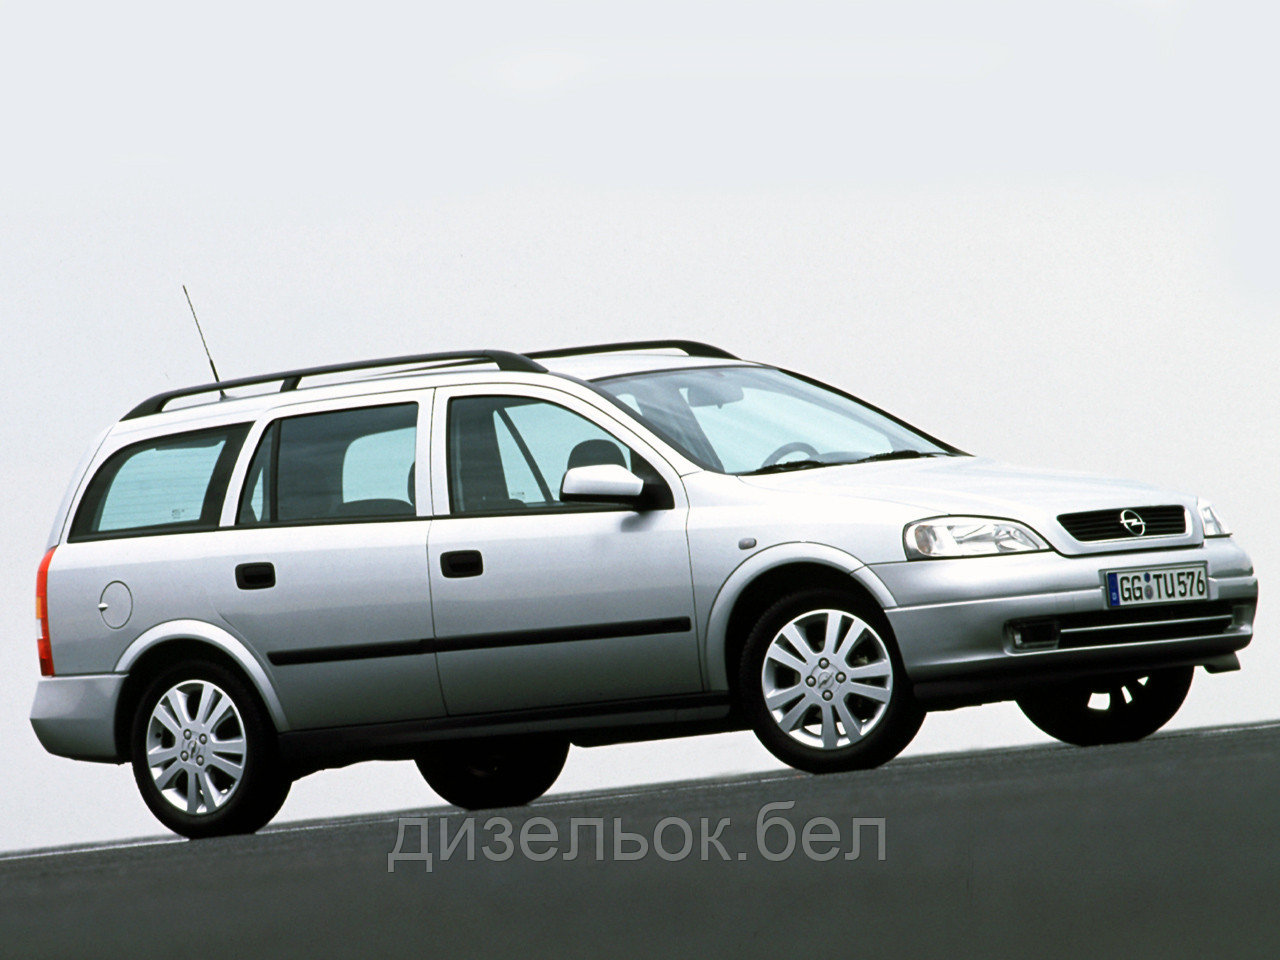 Ремонт Опель Астра Г (Opel Astra G)